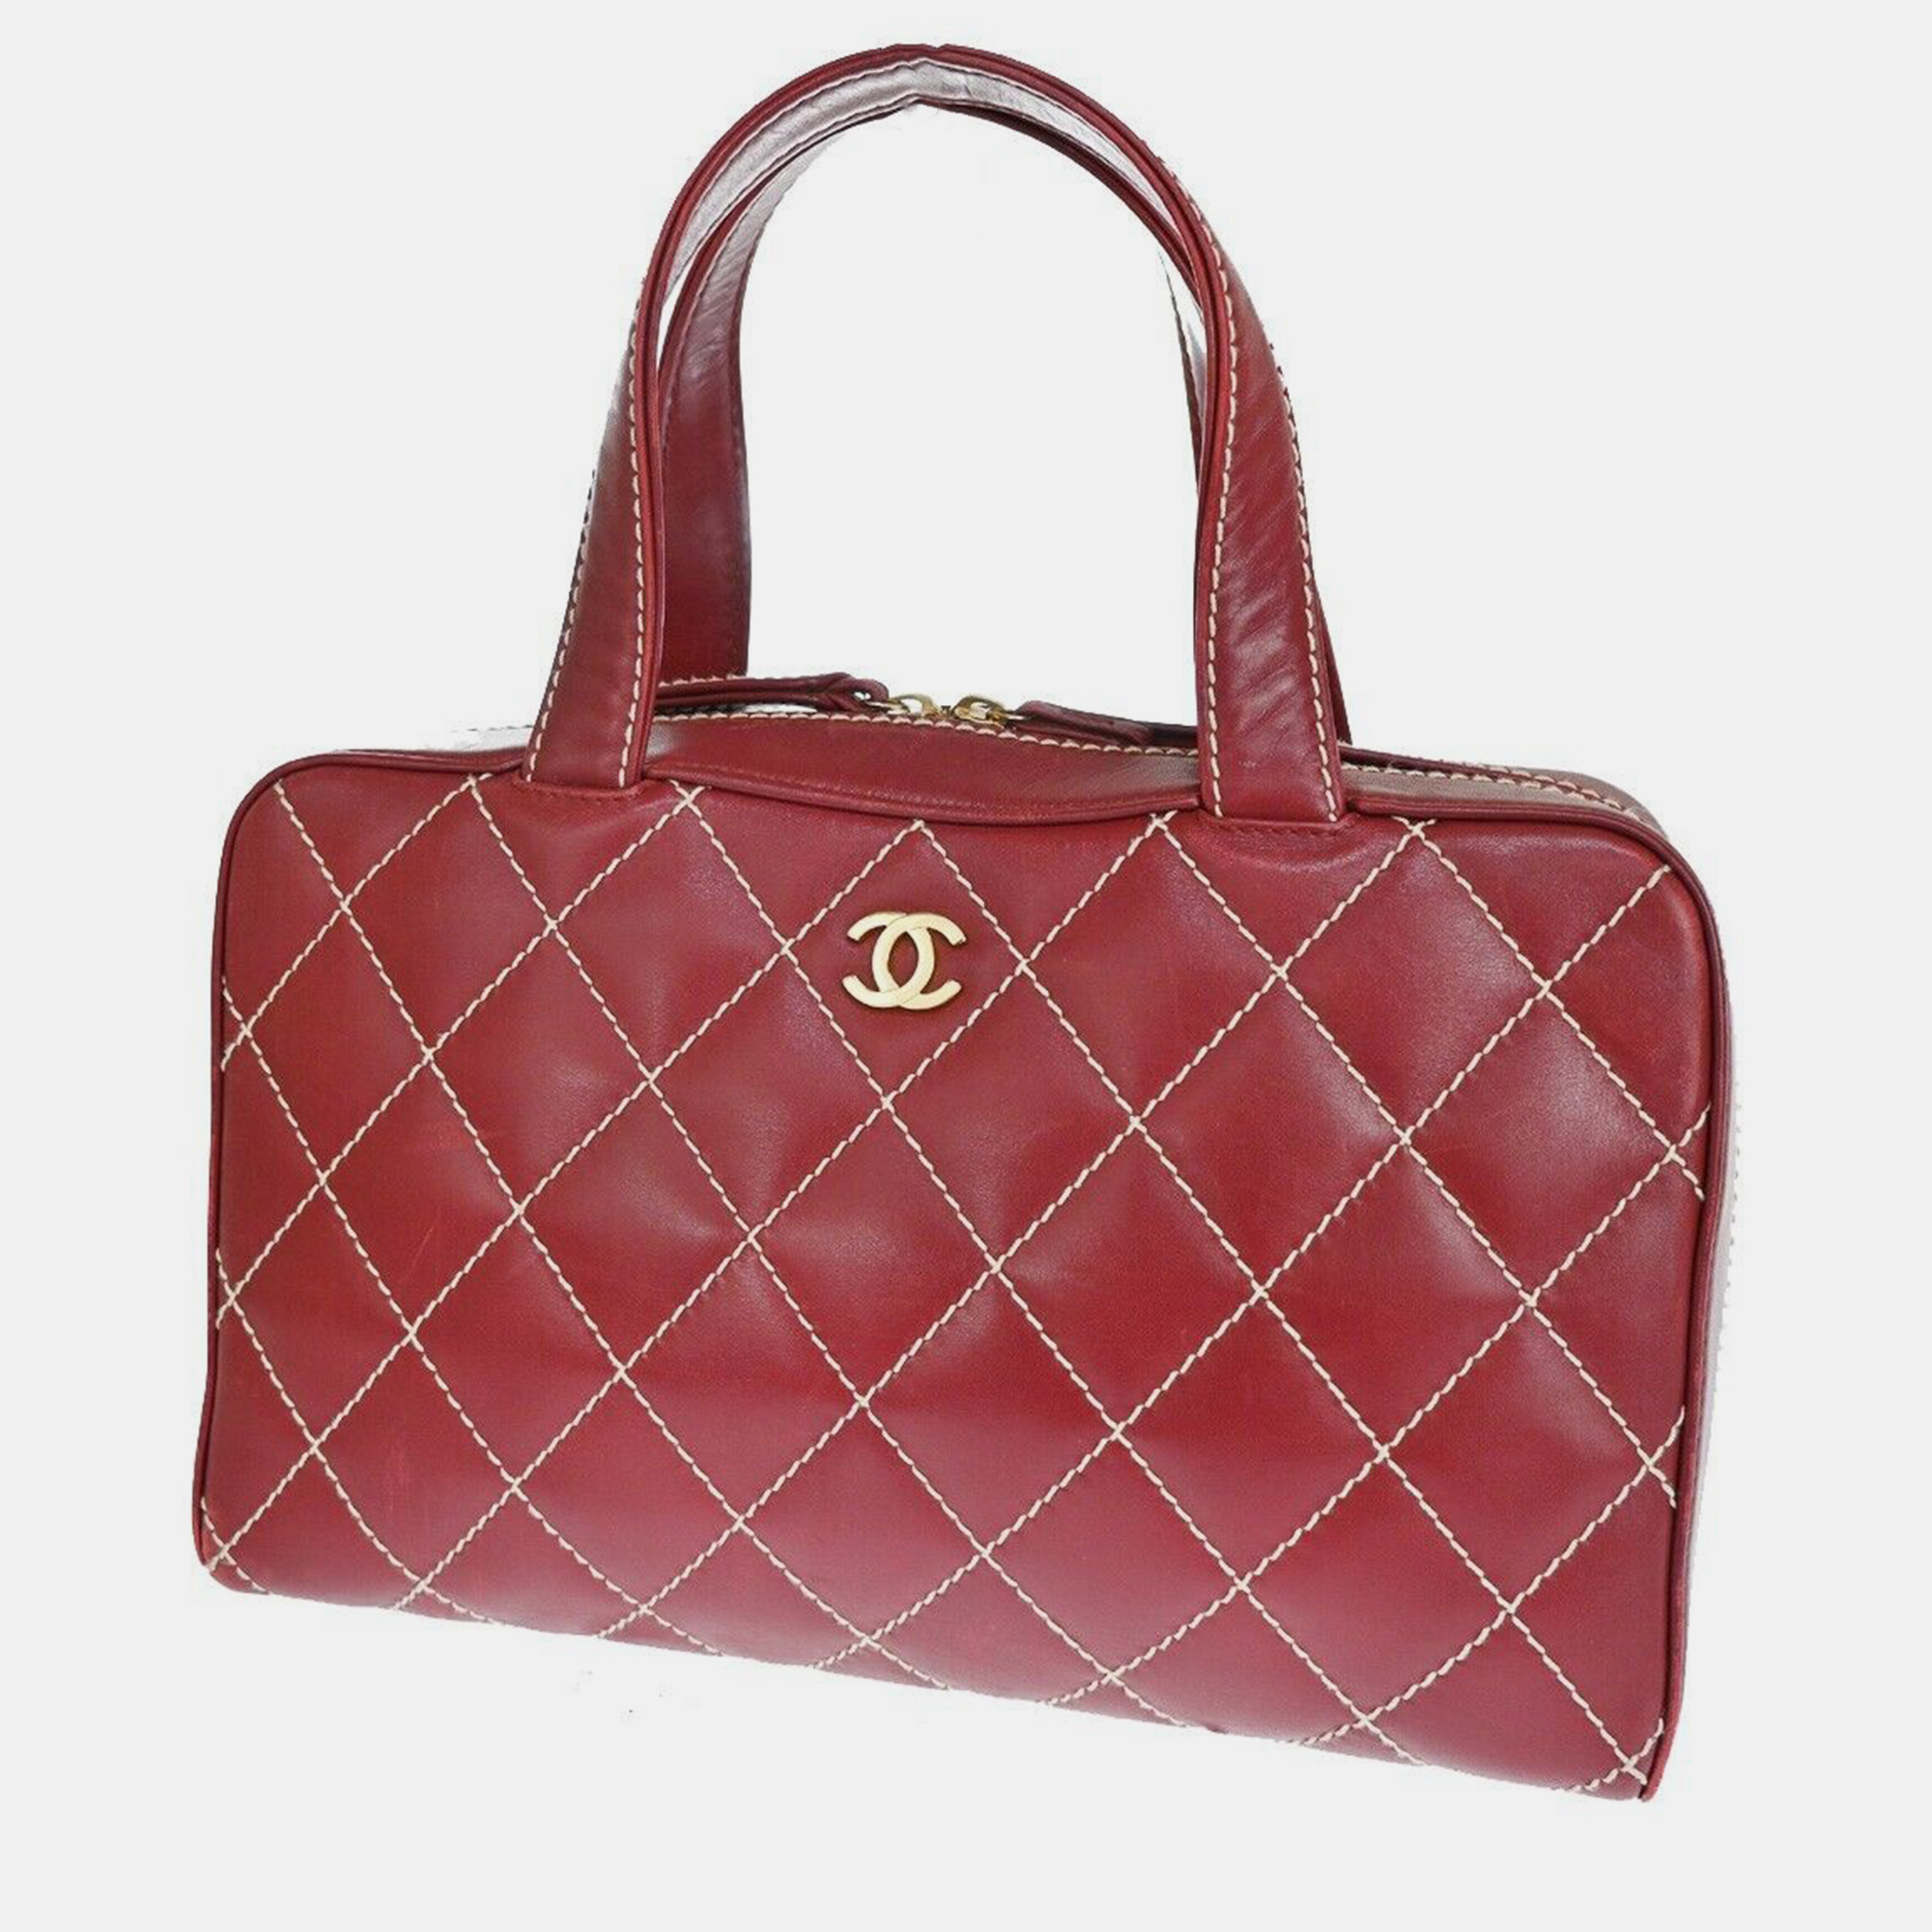 Chanel red leather wild stitch satchel bag